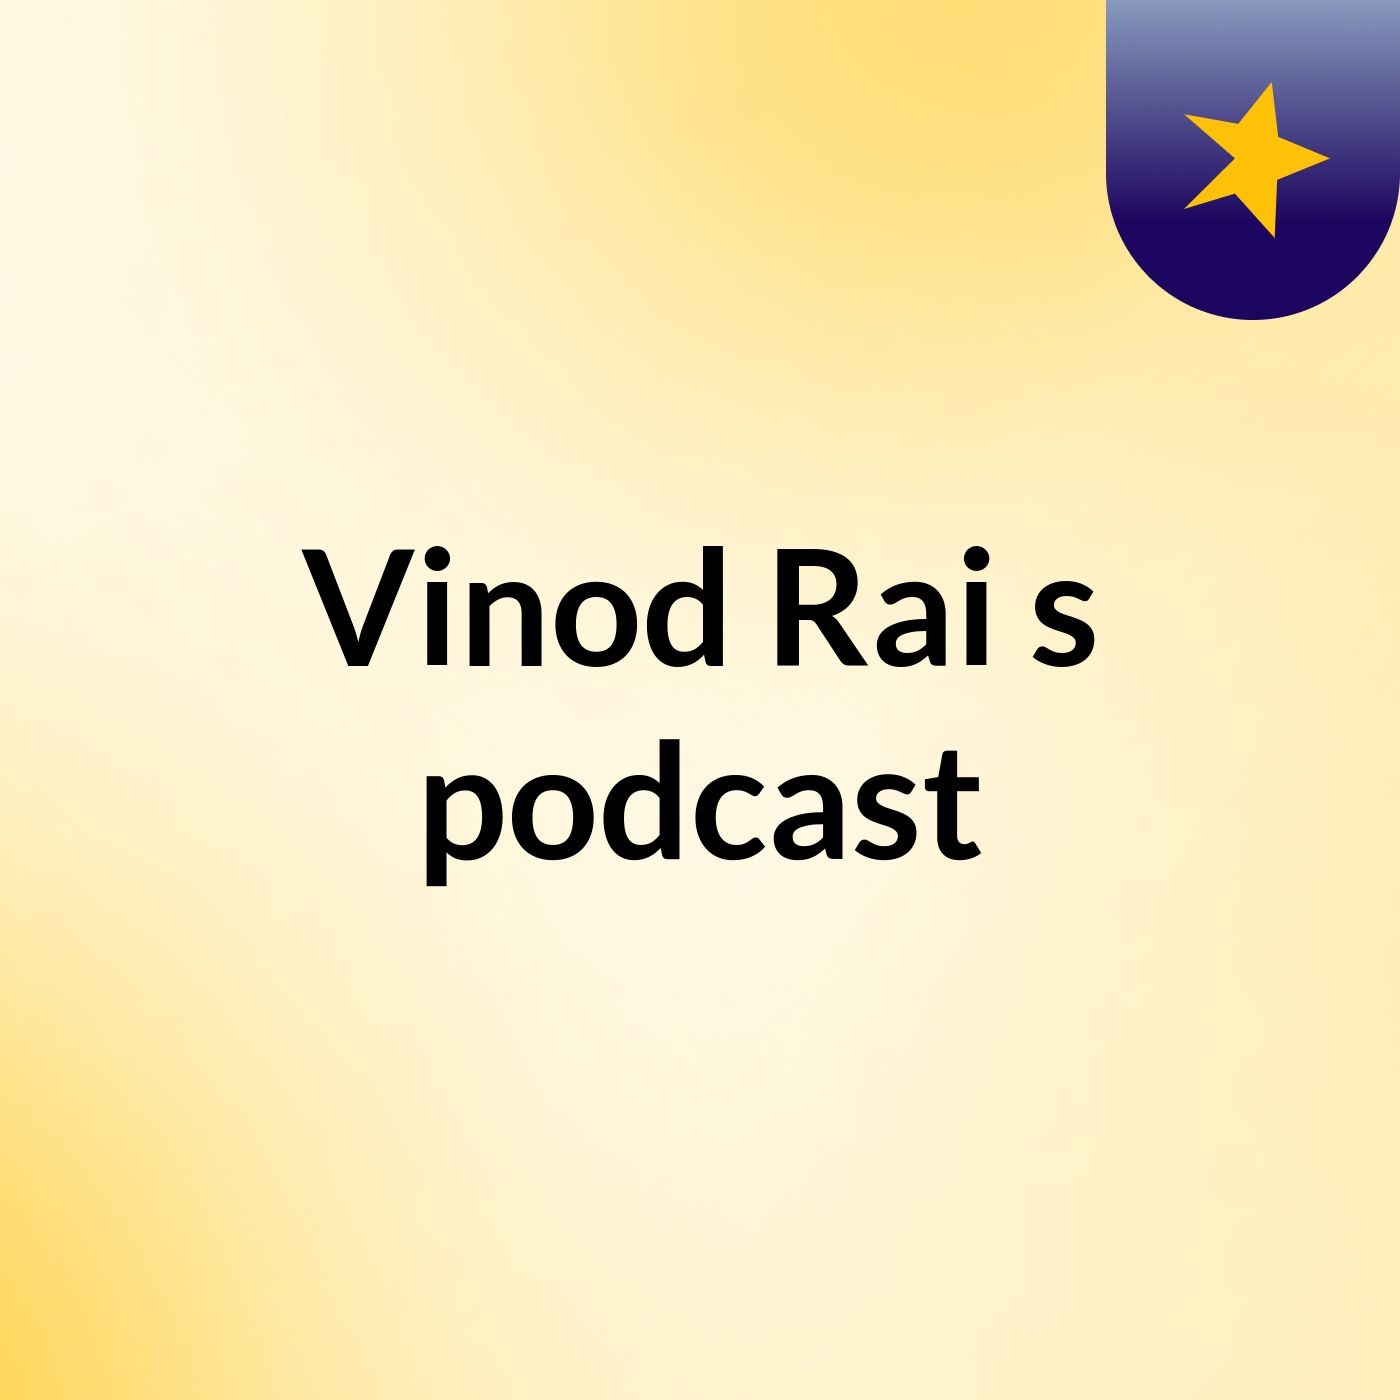 Vinod Rai's podcast